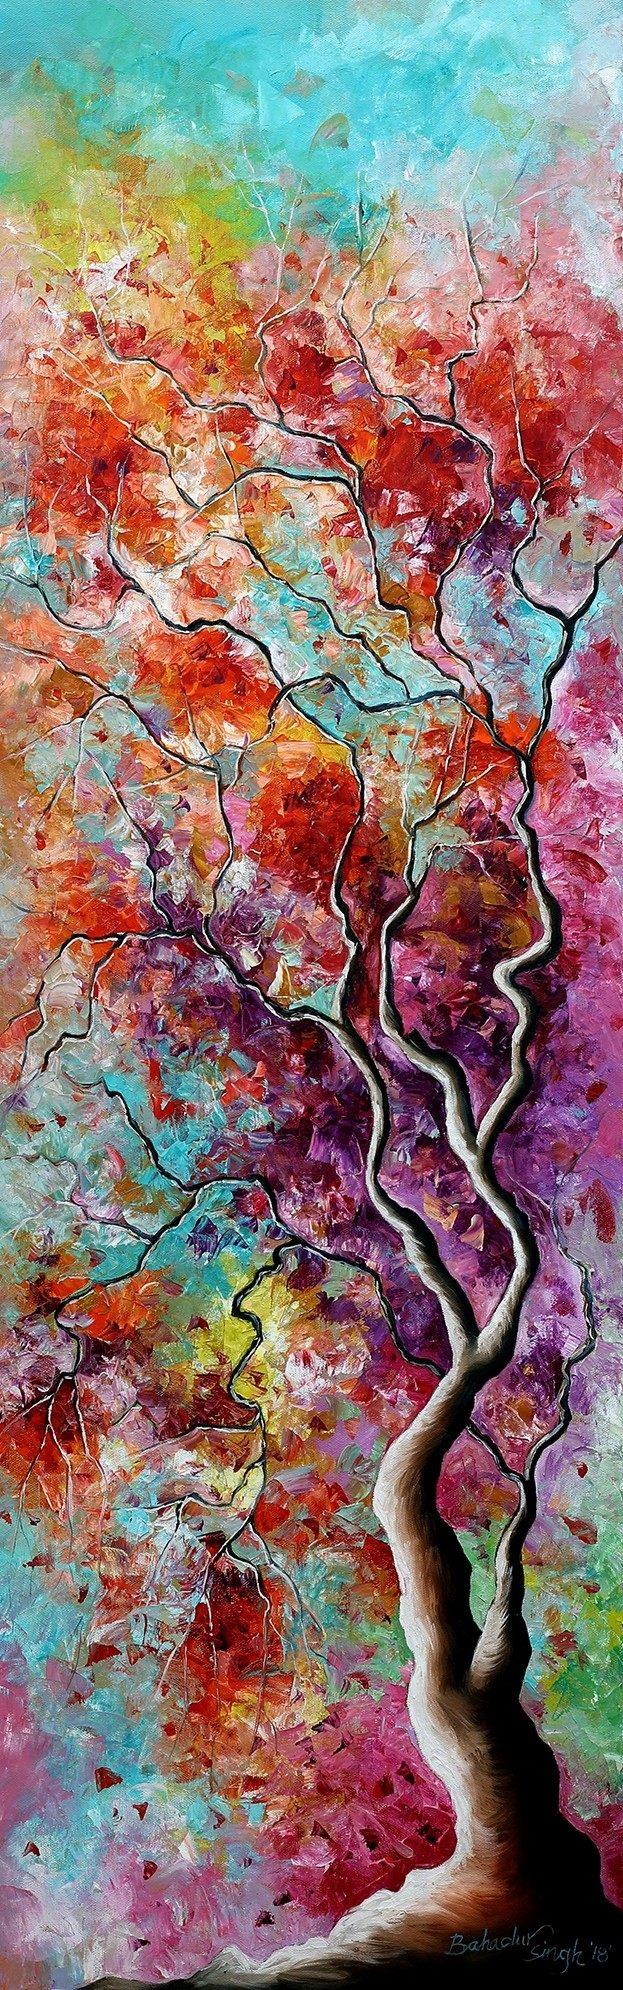 The Glory Of Autumn Painting by Bahadur Singh | ArtZolo.com